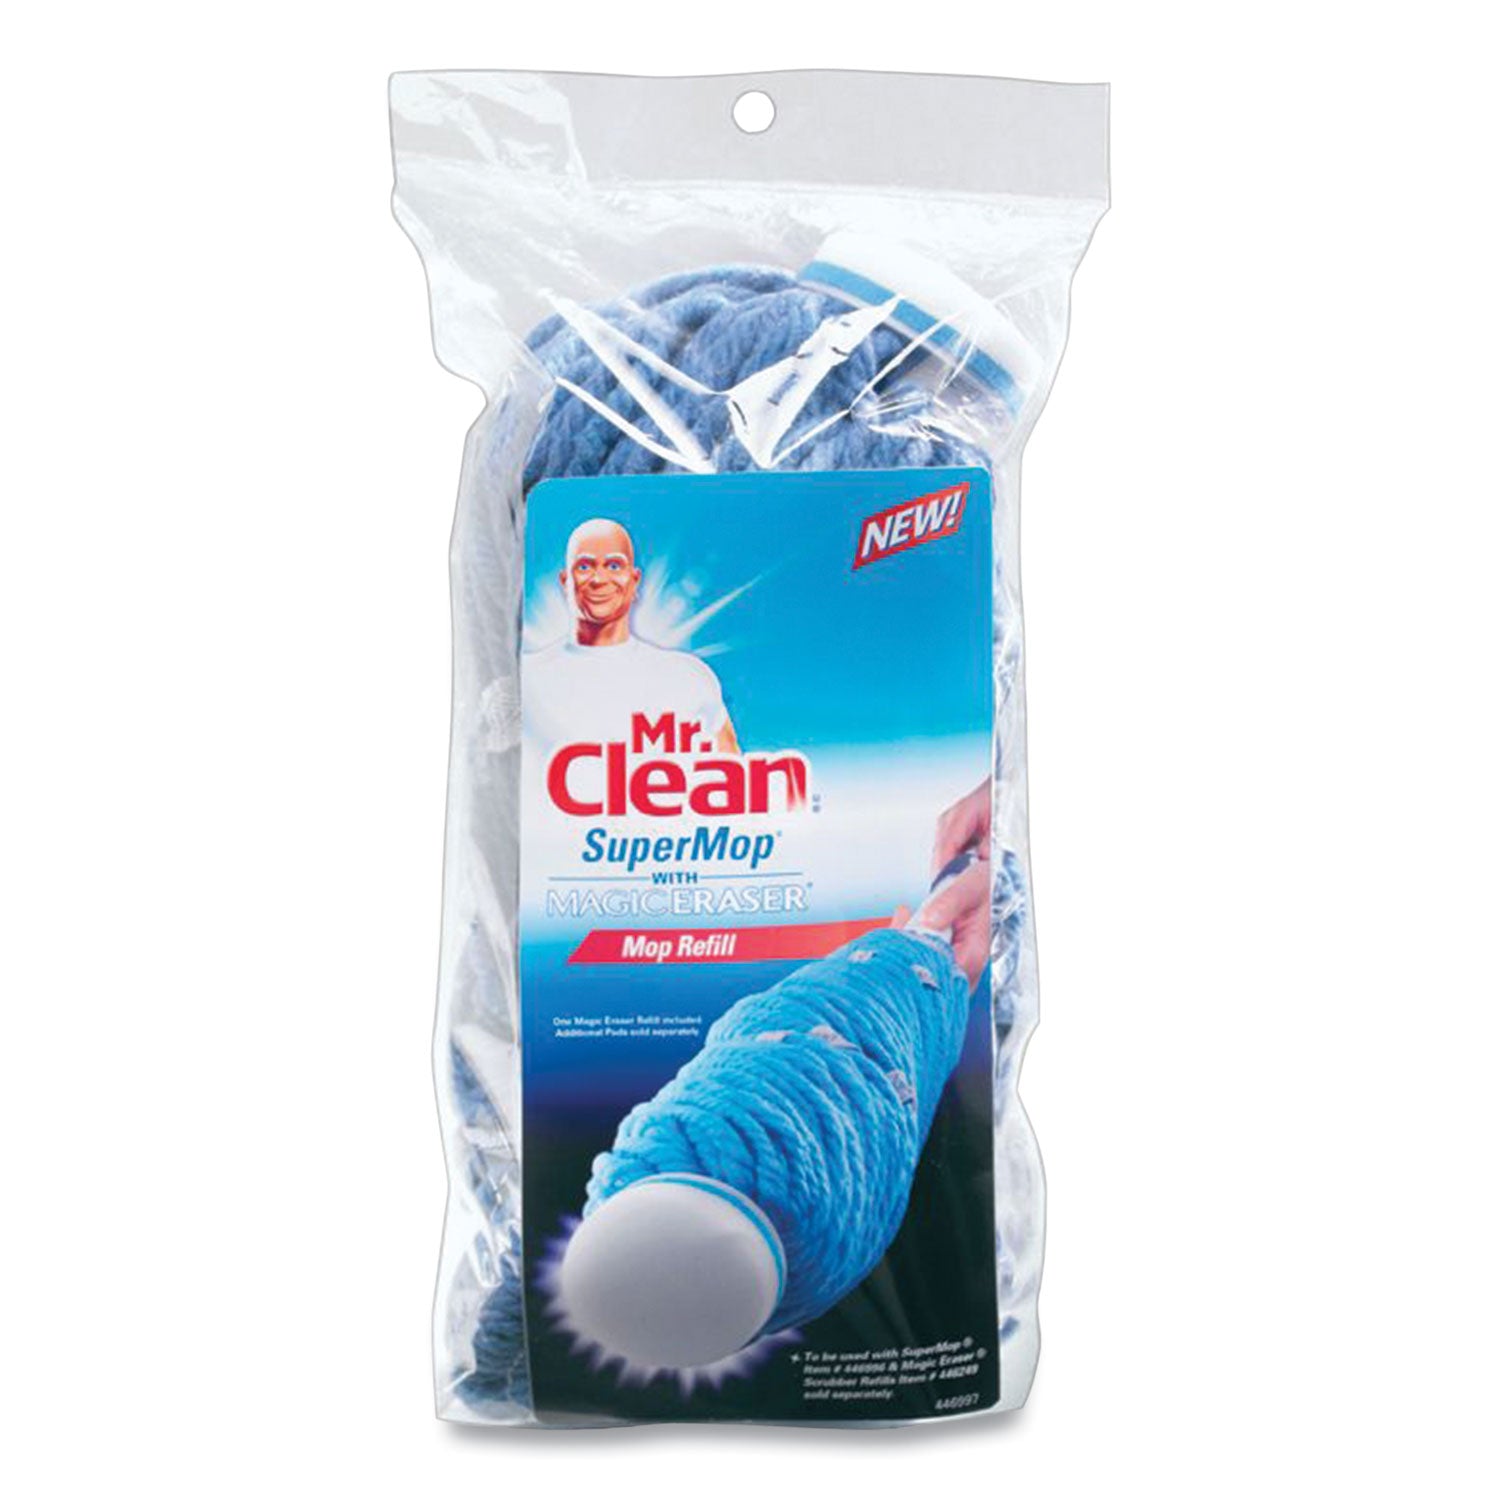 supermop-with-magic-eraser-mop-refill-cotton-blue_pgc446997 - 1